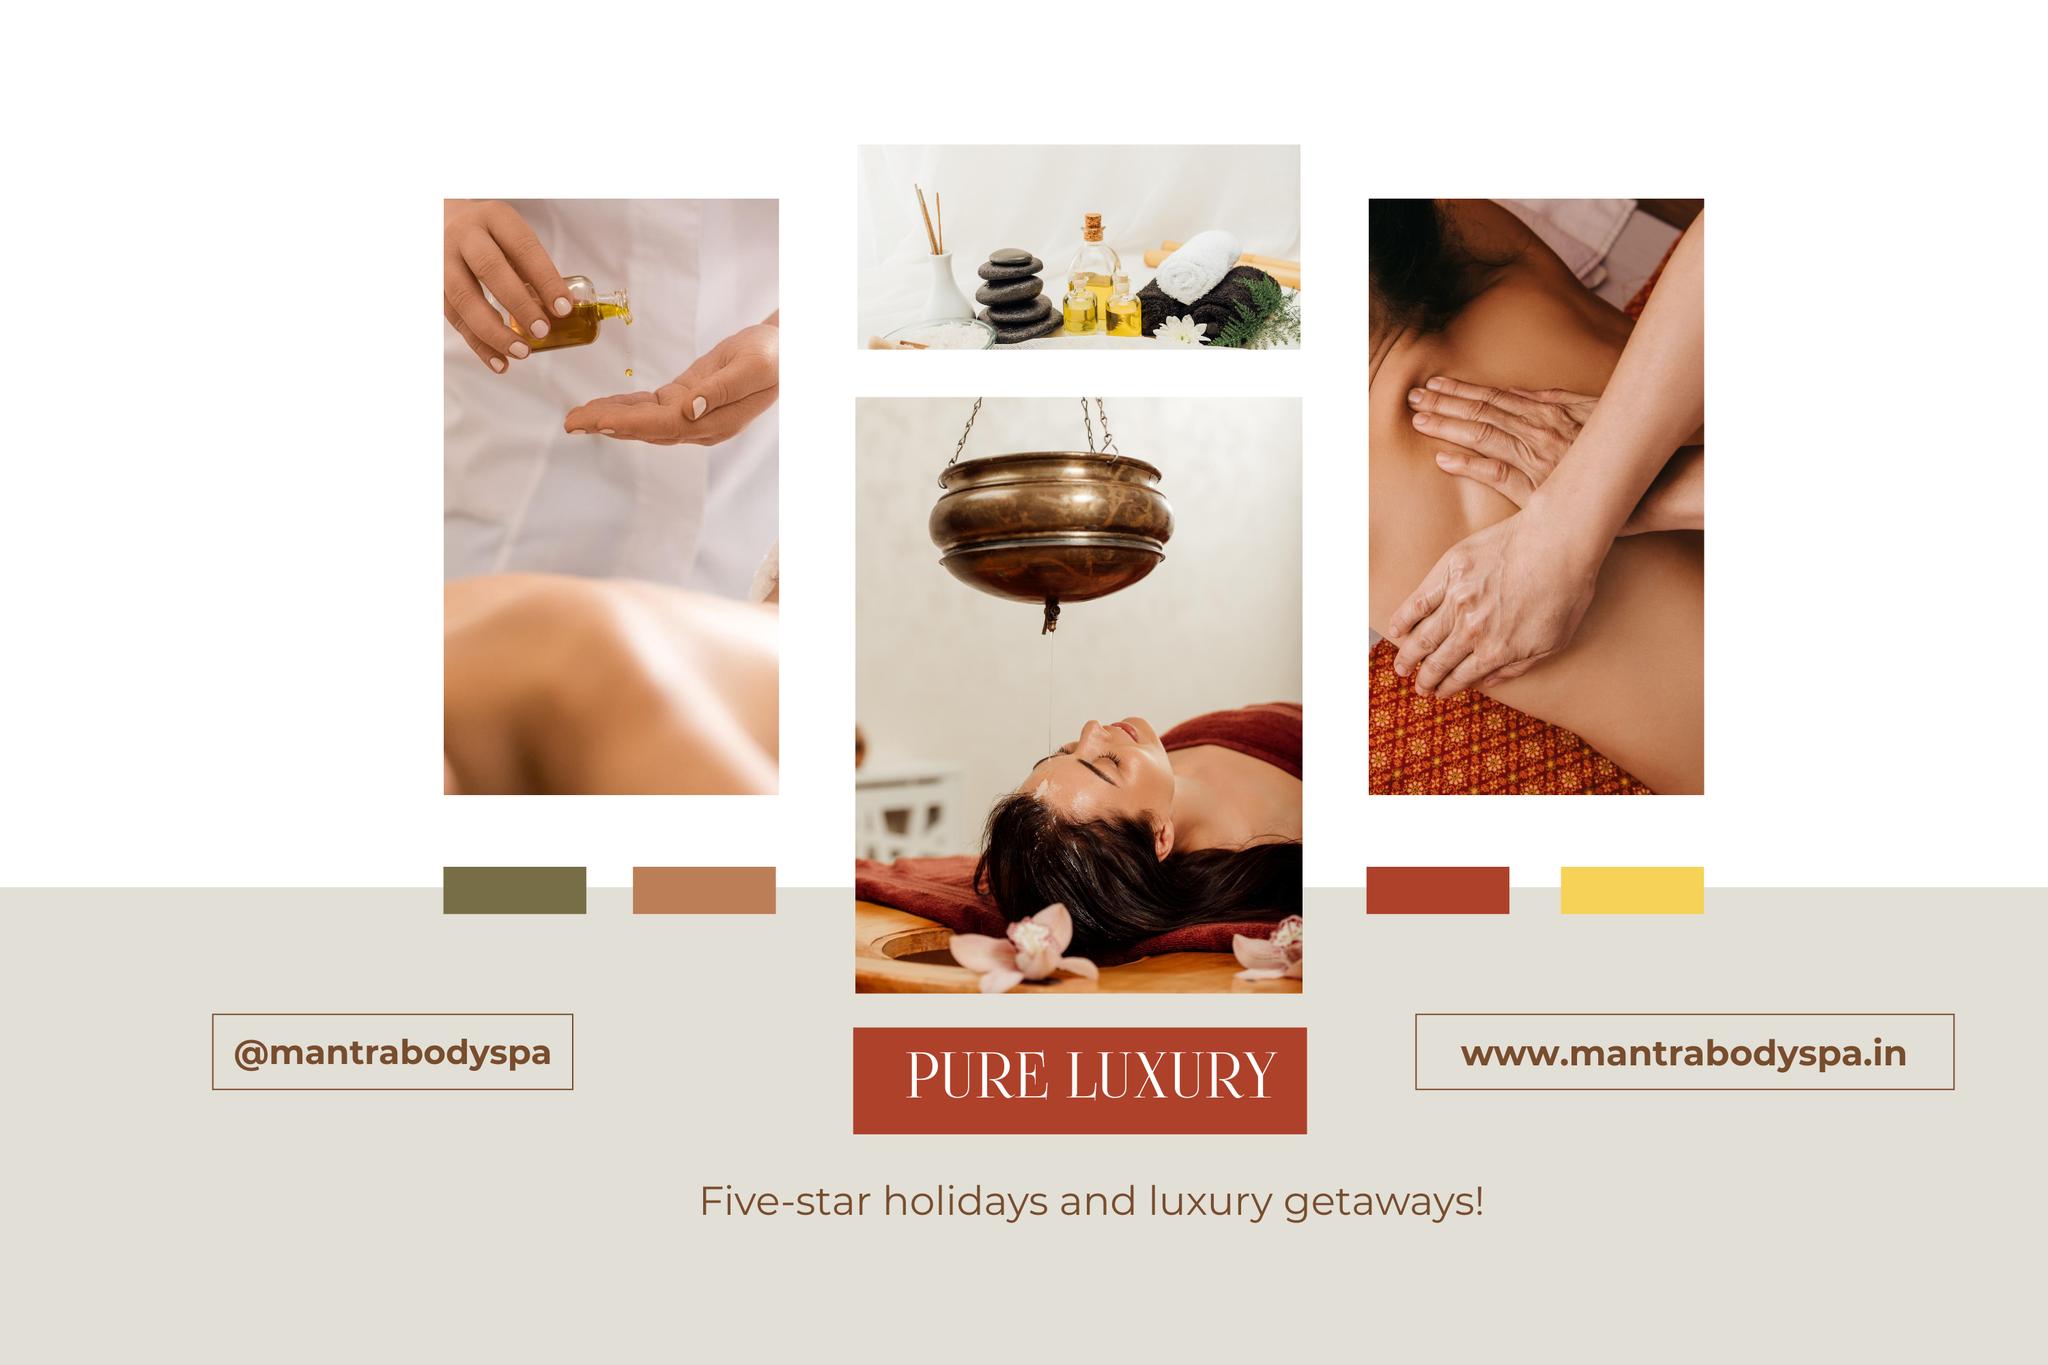 Mantra Body Spa: Premier Body to Body Massage in Saket, New Delhi